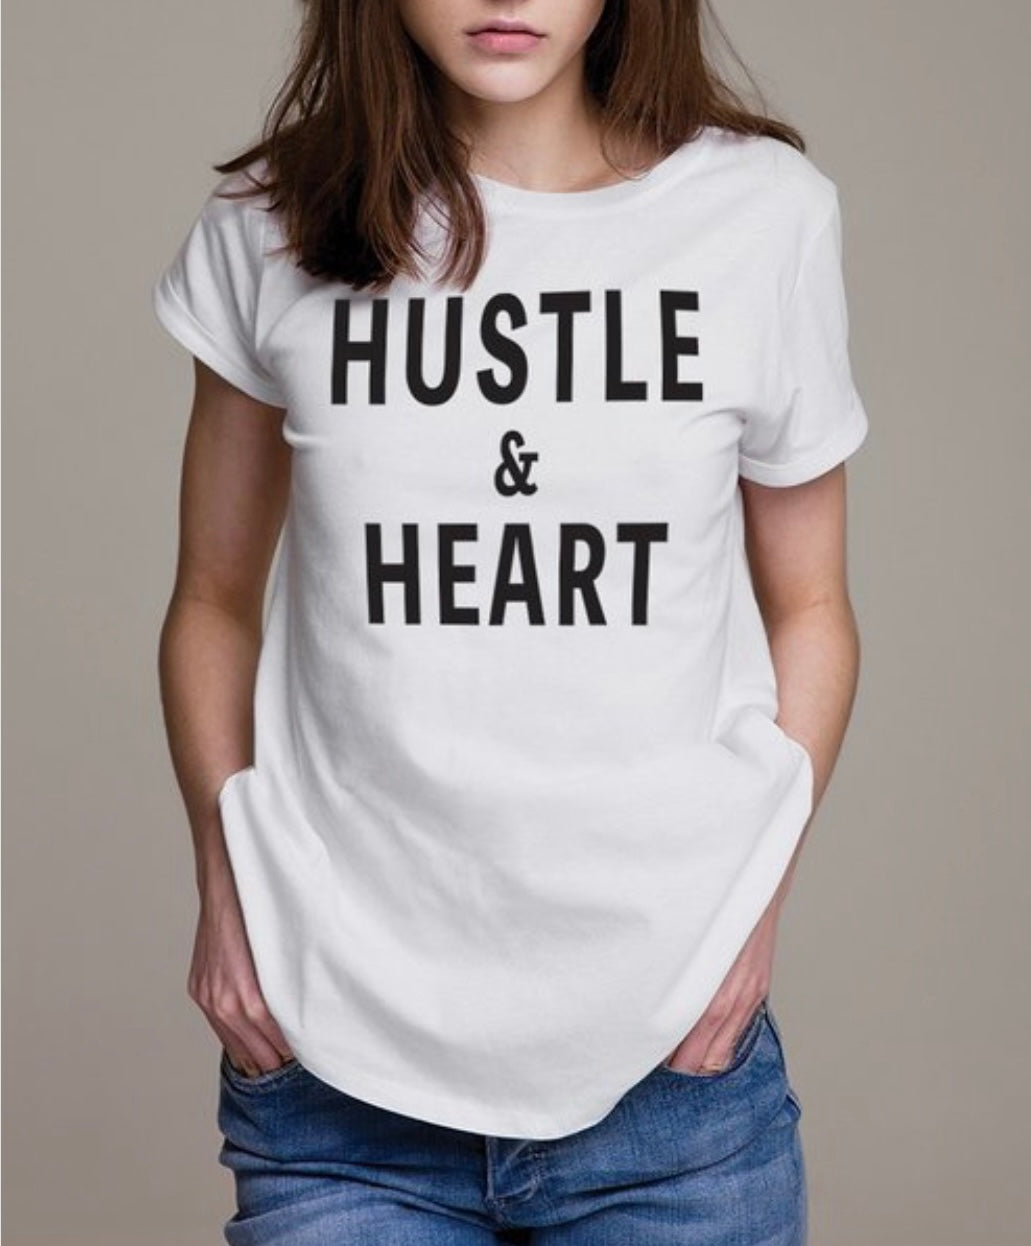 "Hustle & Heart" Tee